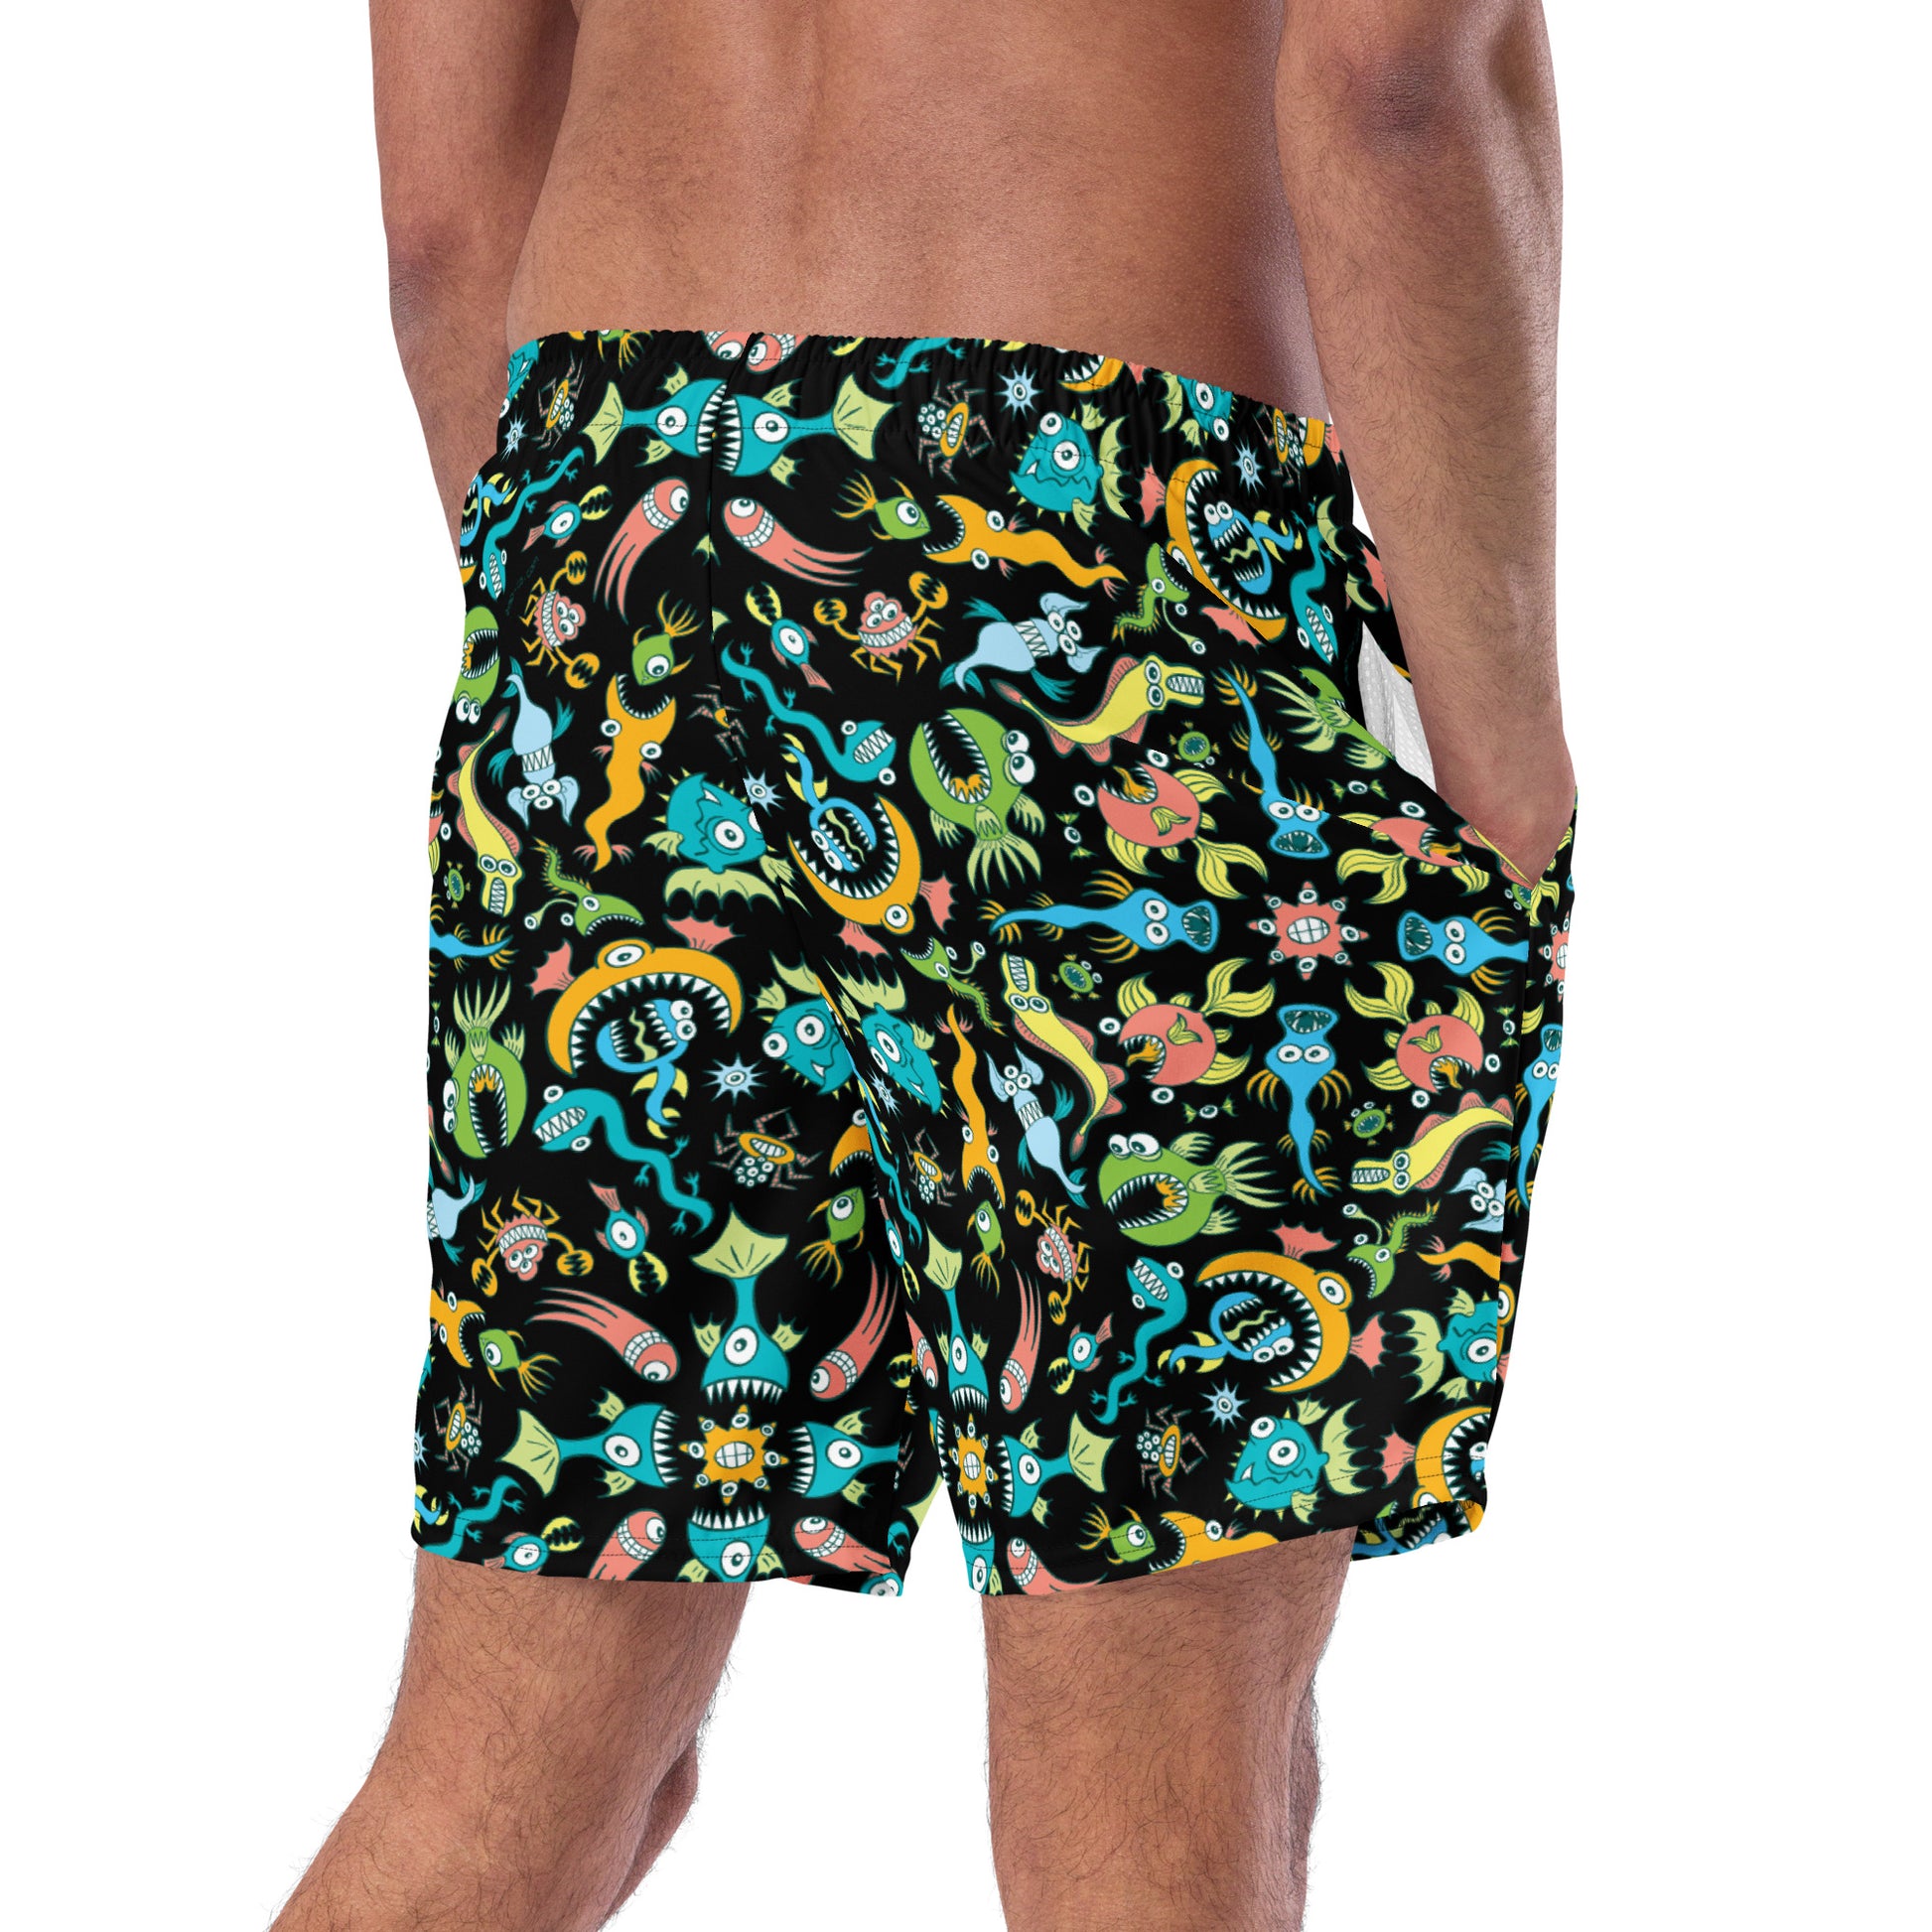 Sea creatures pattern design Men's swim trunks. Back view